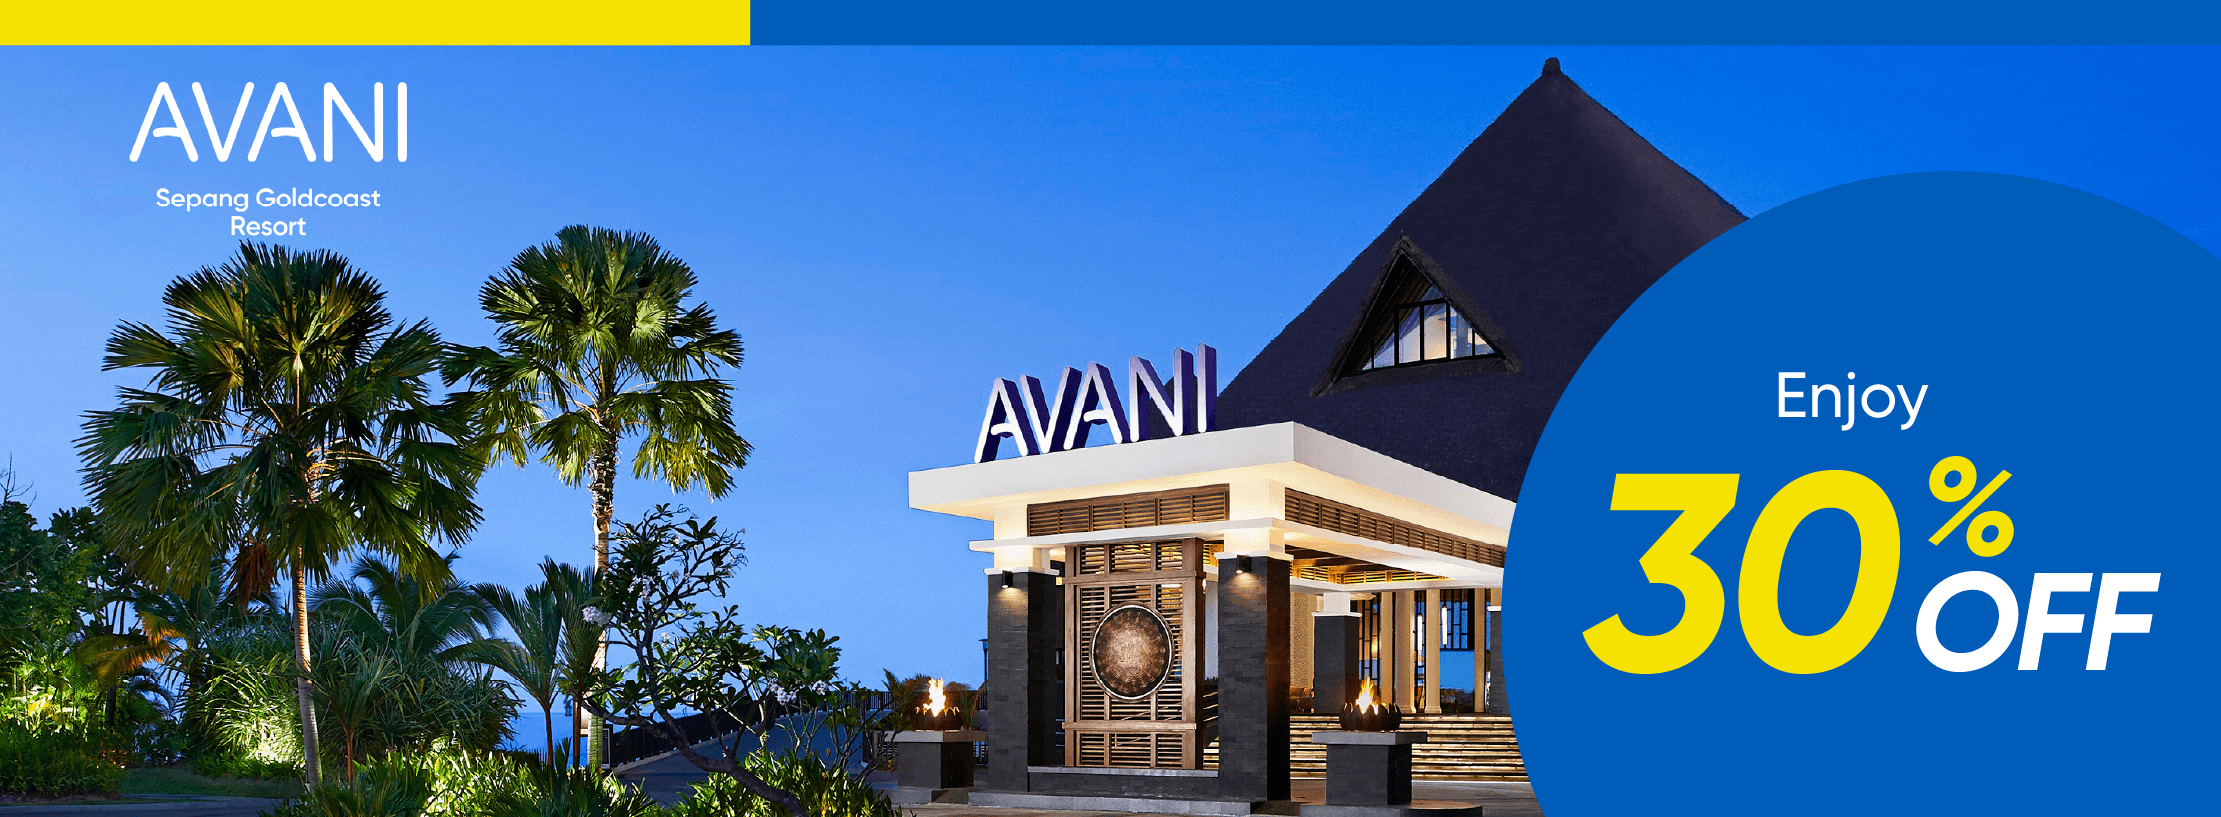 avani-web-banner-8.png